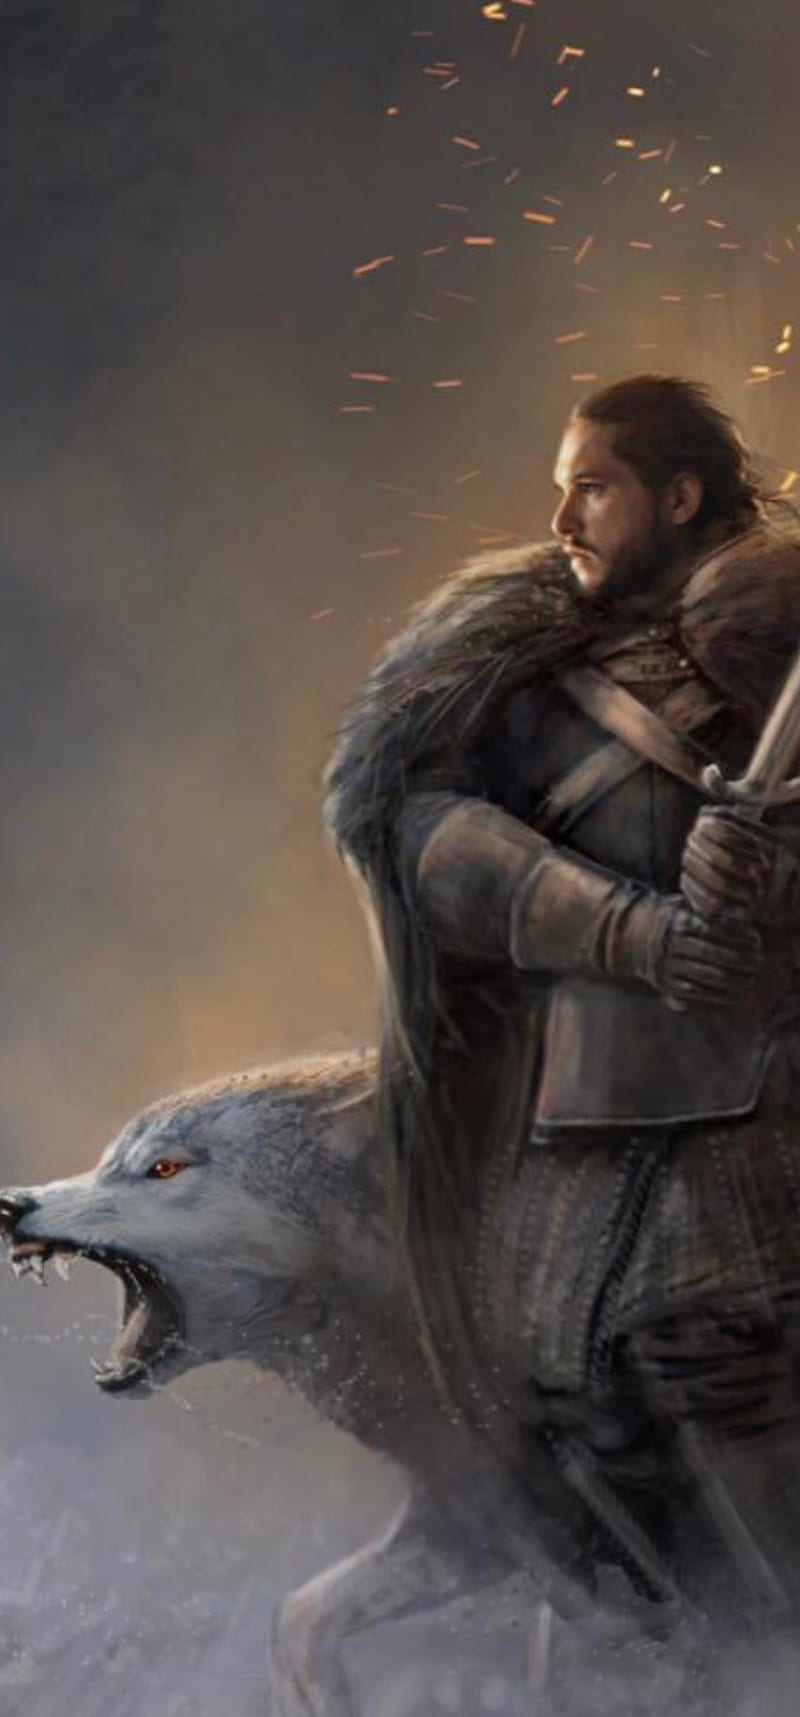 500 Daenerys Targaryen And Jon Snow Iphone Wallpapers  Background  Beautiful Best Available For Download Daenerys Targaryen And Jon Snow  Iphone Images Free On Zicxacomphotos  Zicxa Photos